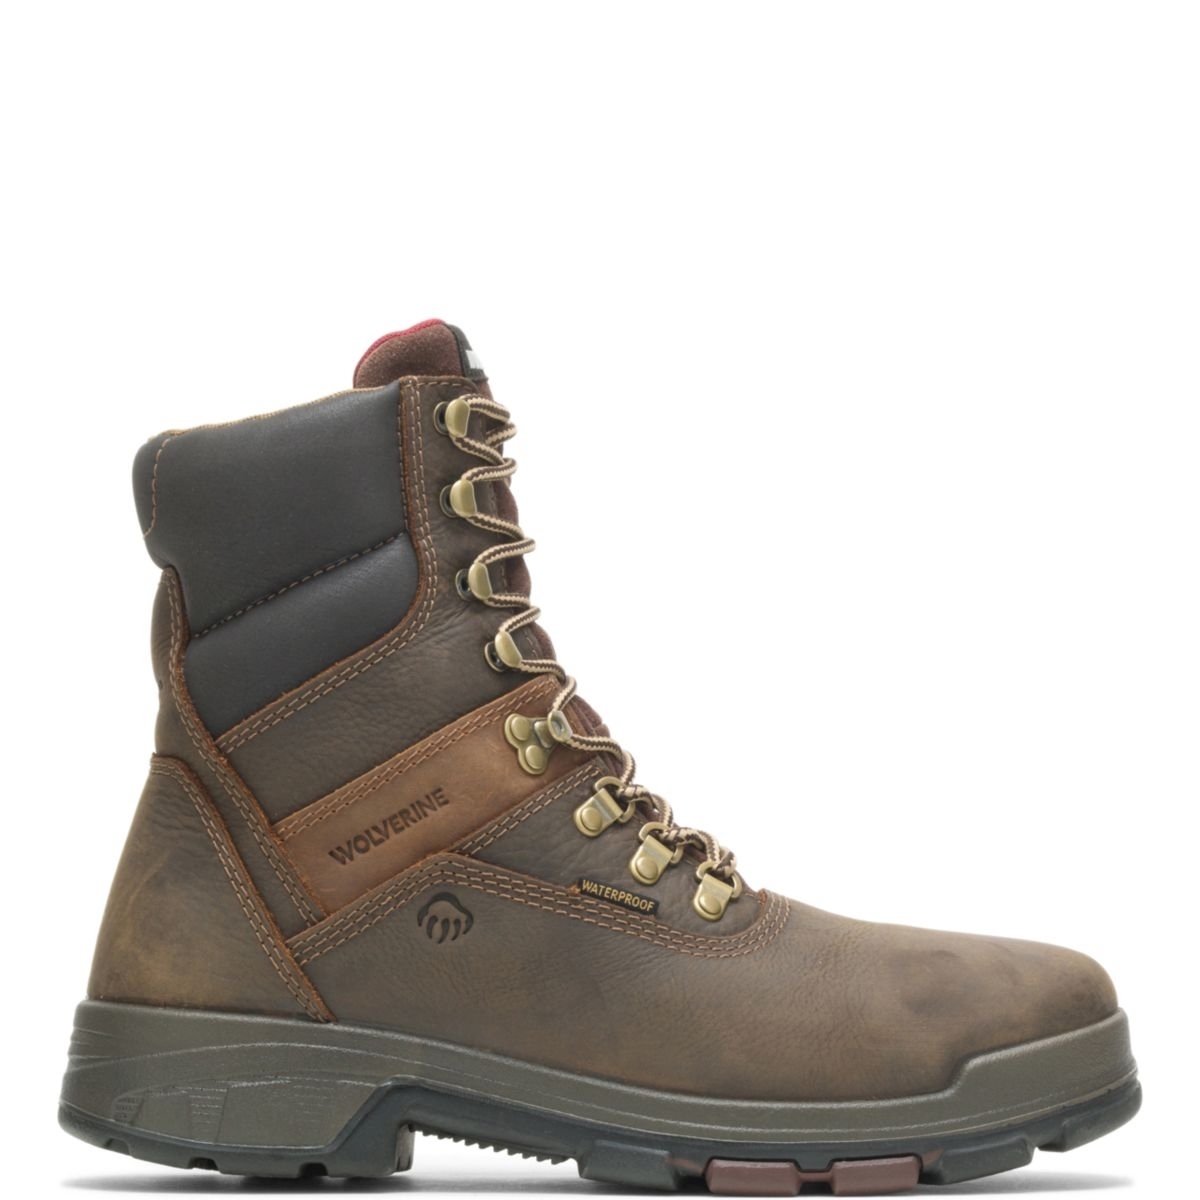 WOLVERINE Men's Cabor EPXÂ® 8 Waterproof Composite Toe Work Boot Dark Brown - W10316 BROWN - BROWN, 14-D